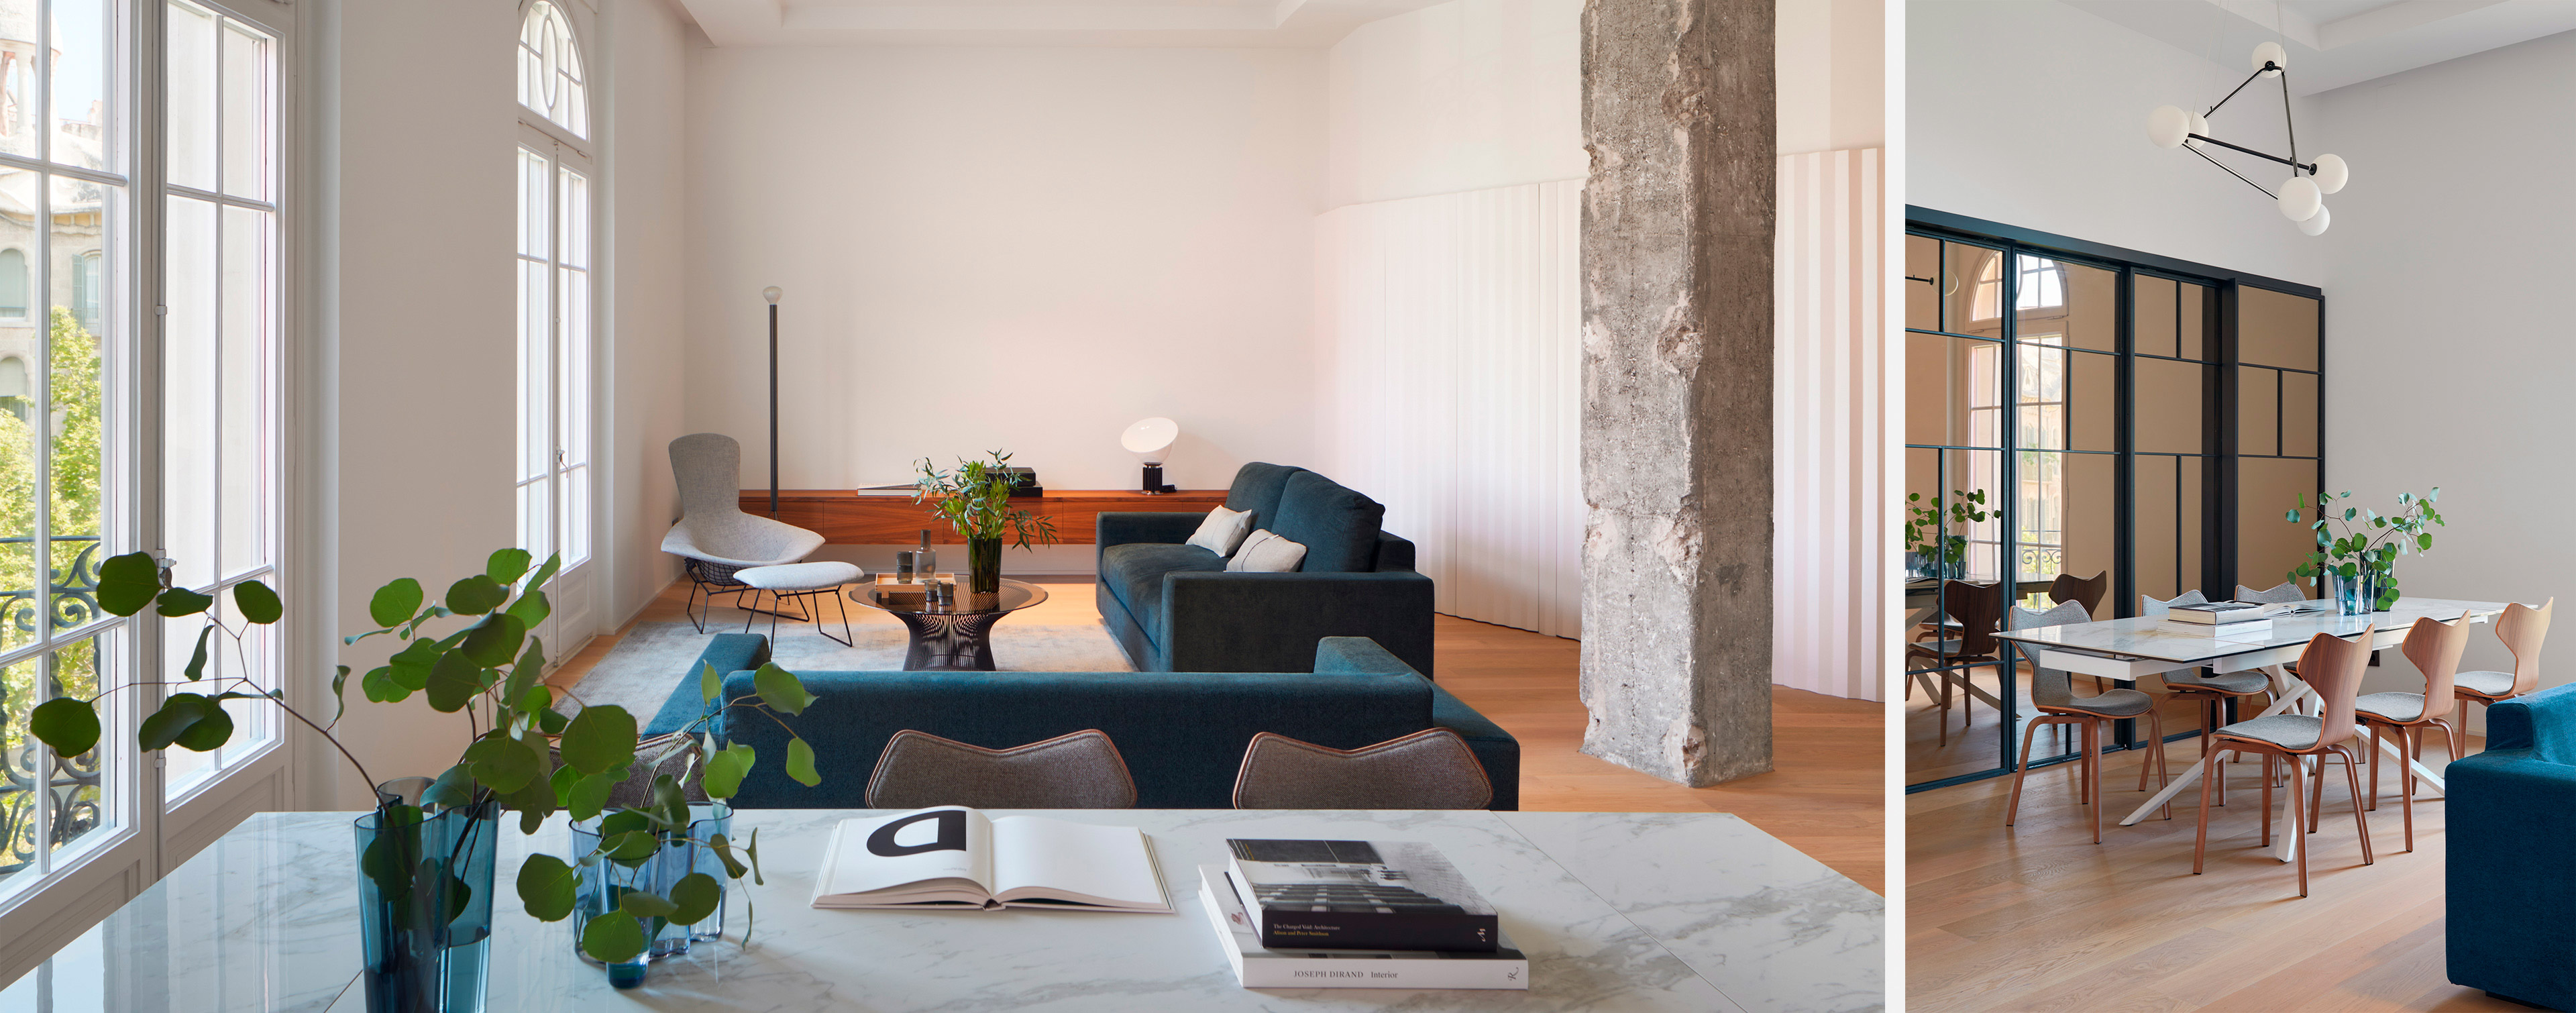 luv studio luxury architects barcelona diagonal apartment IMG 03 - Diagonal Apartment 